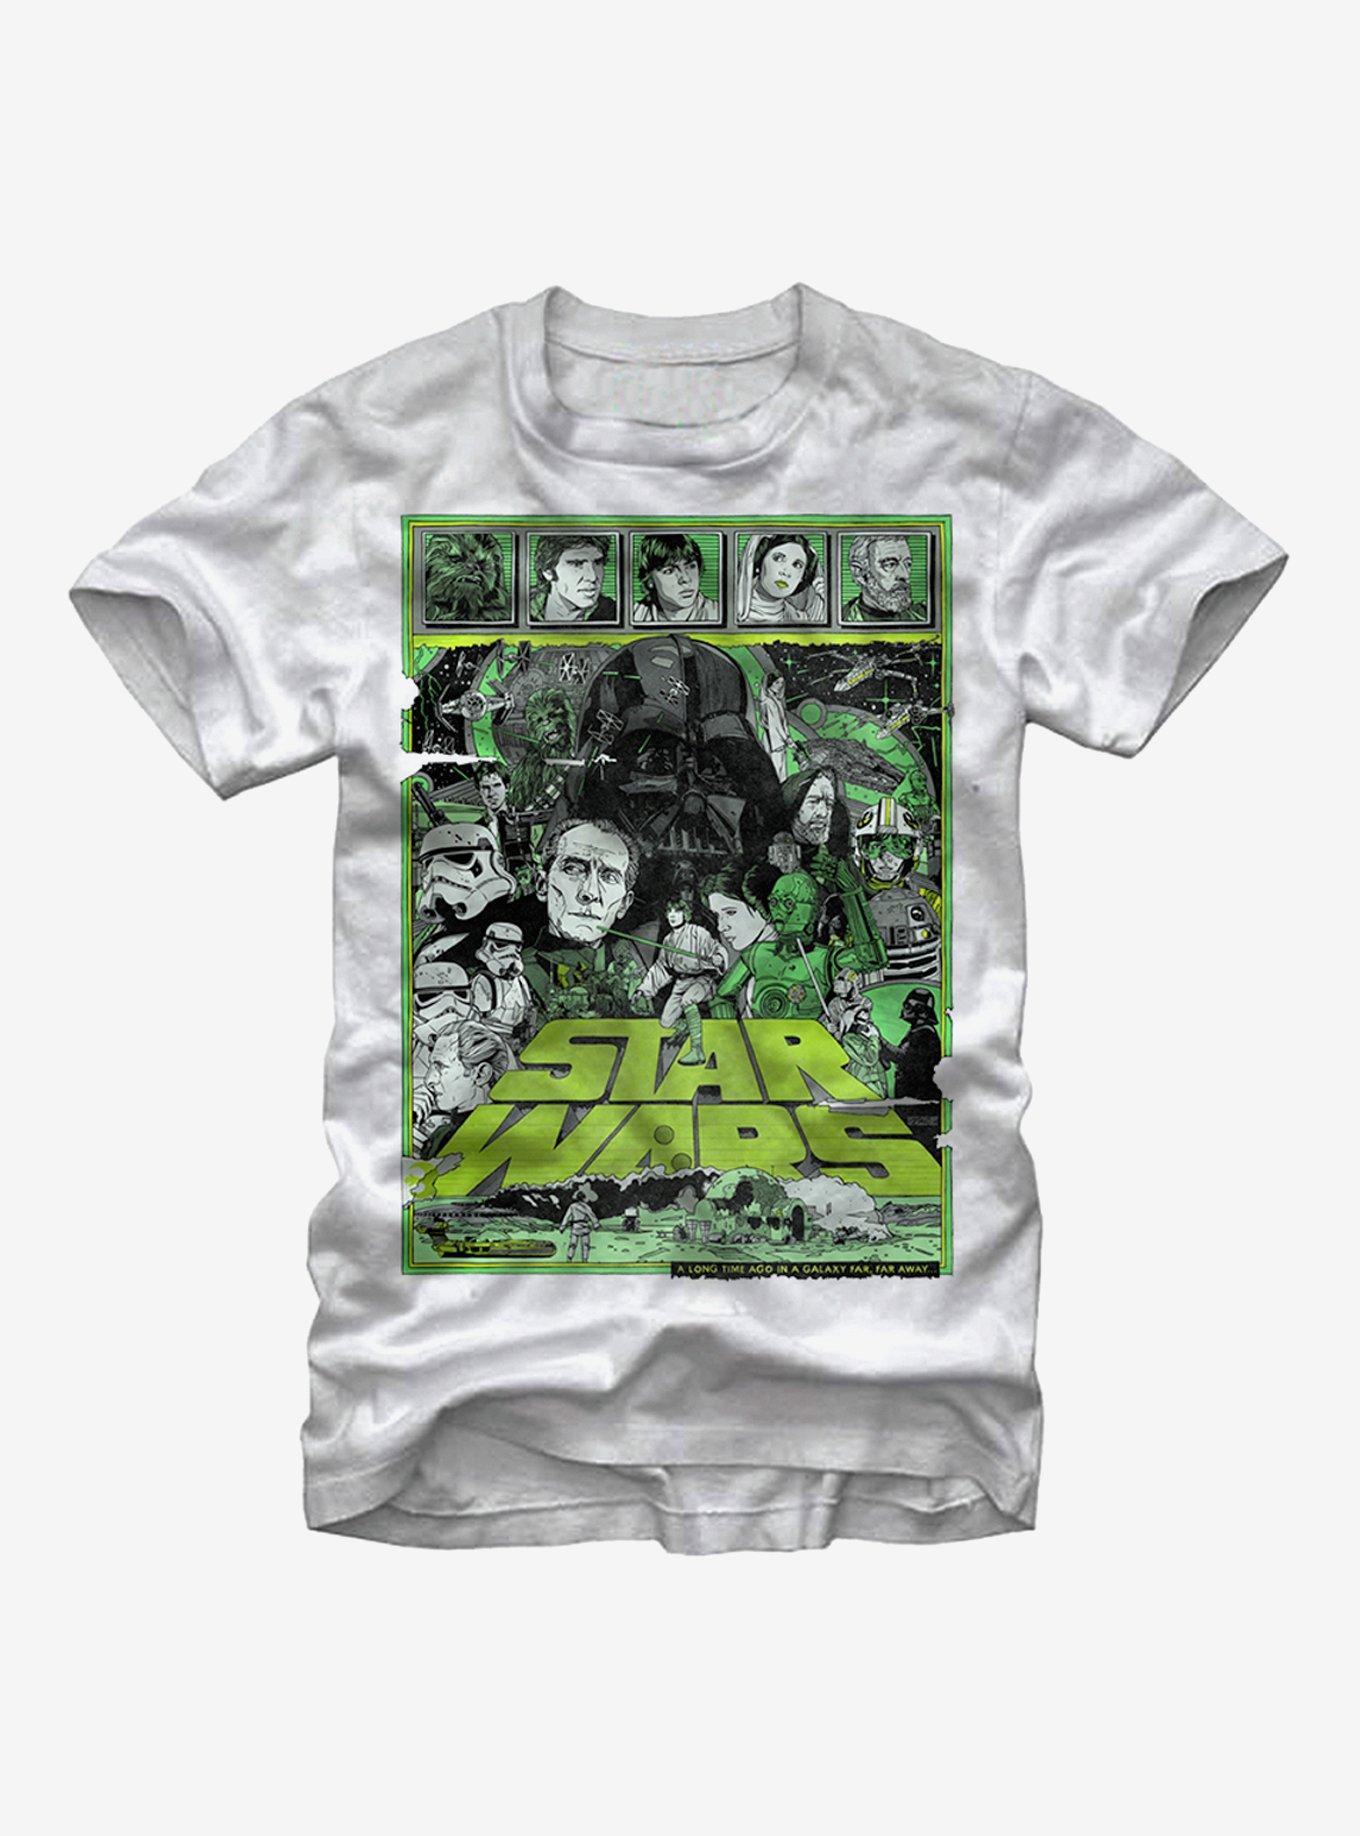 Star Wars Episode IV A New Hope T-Shirt